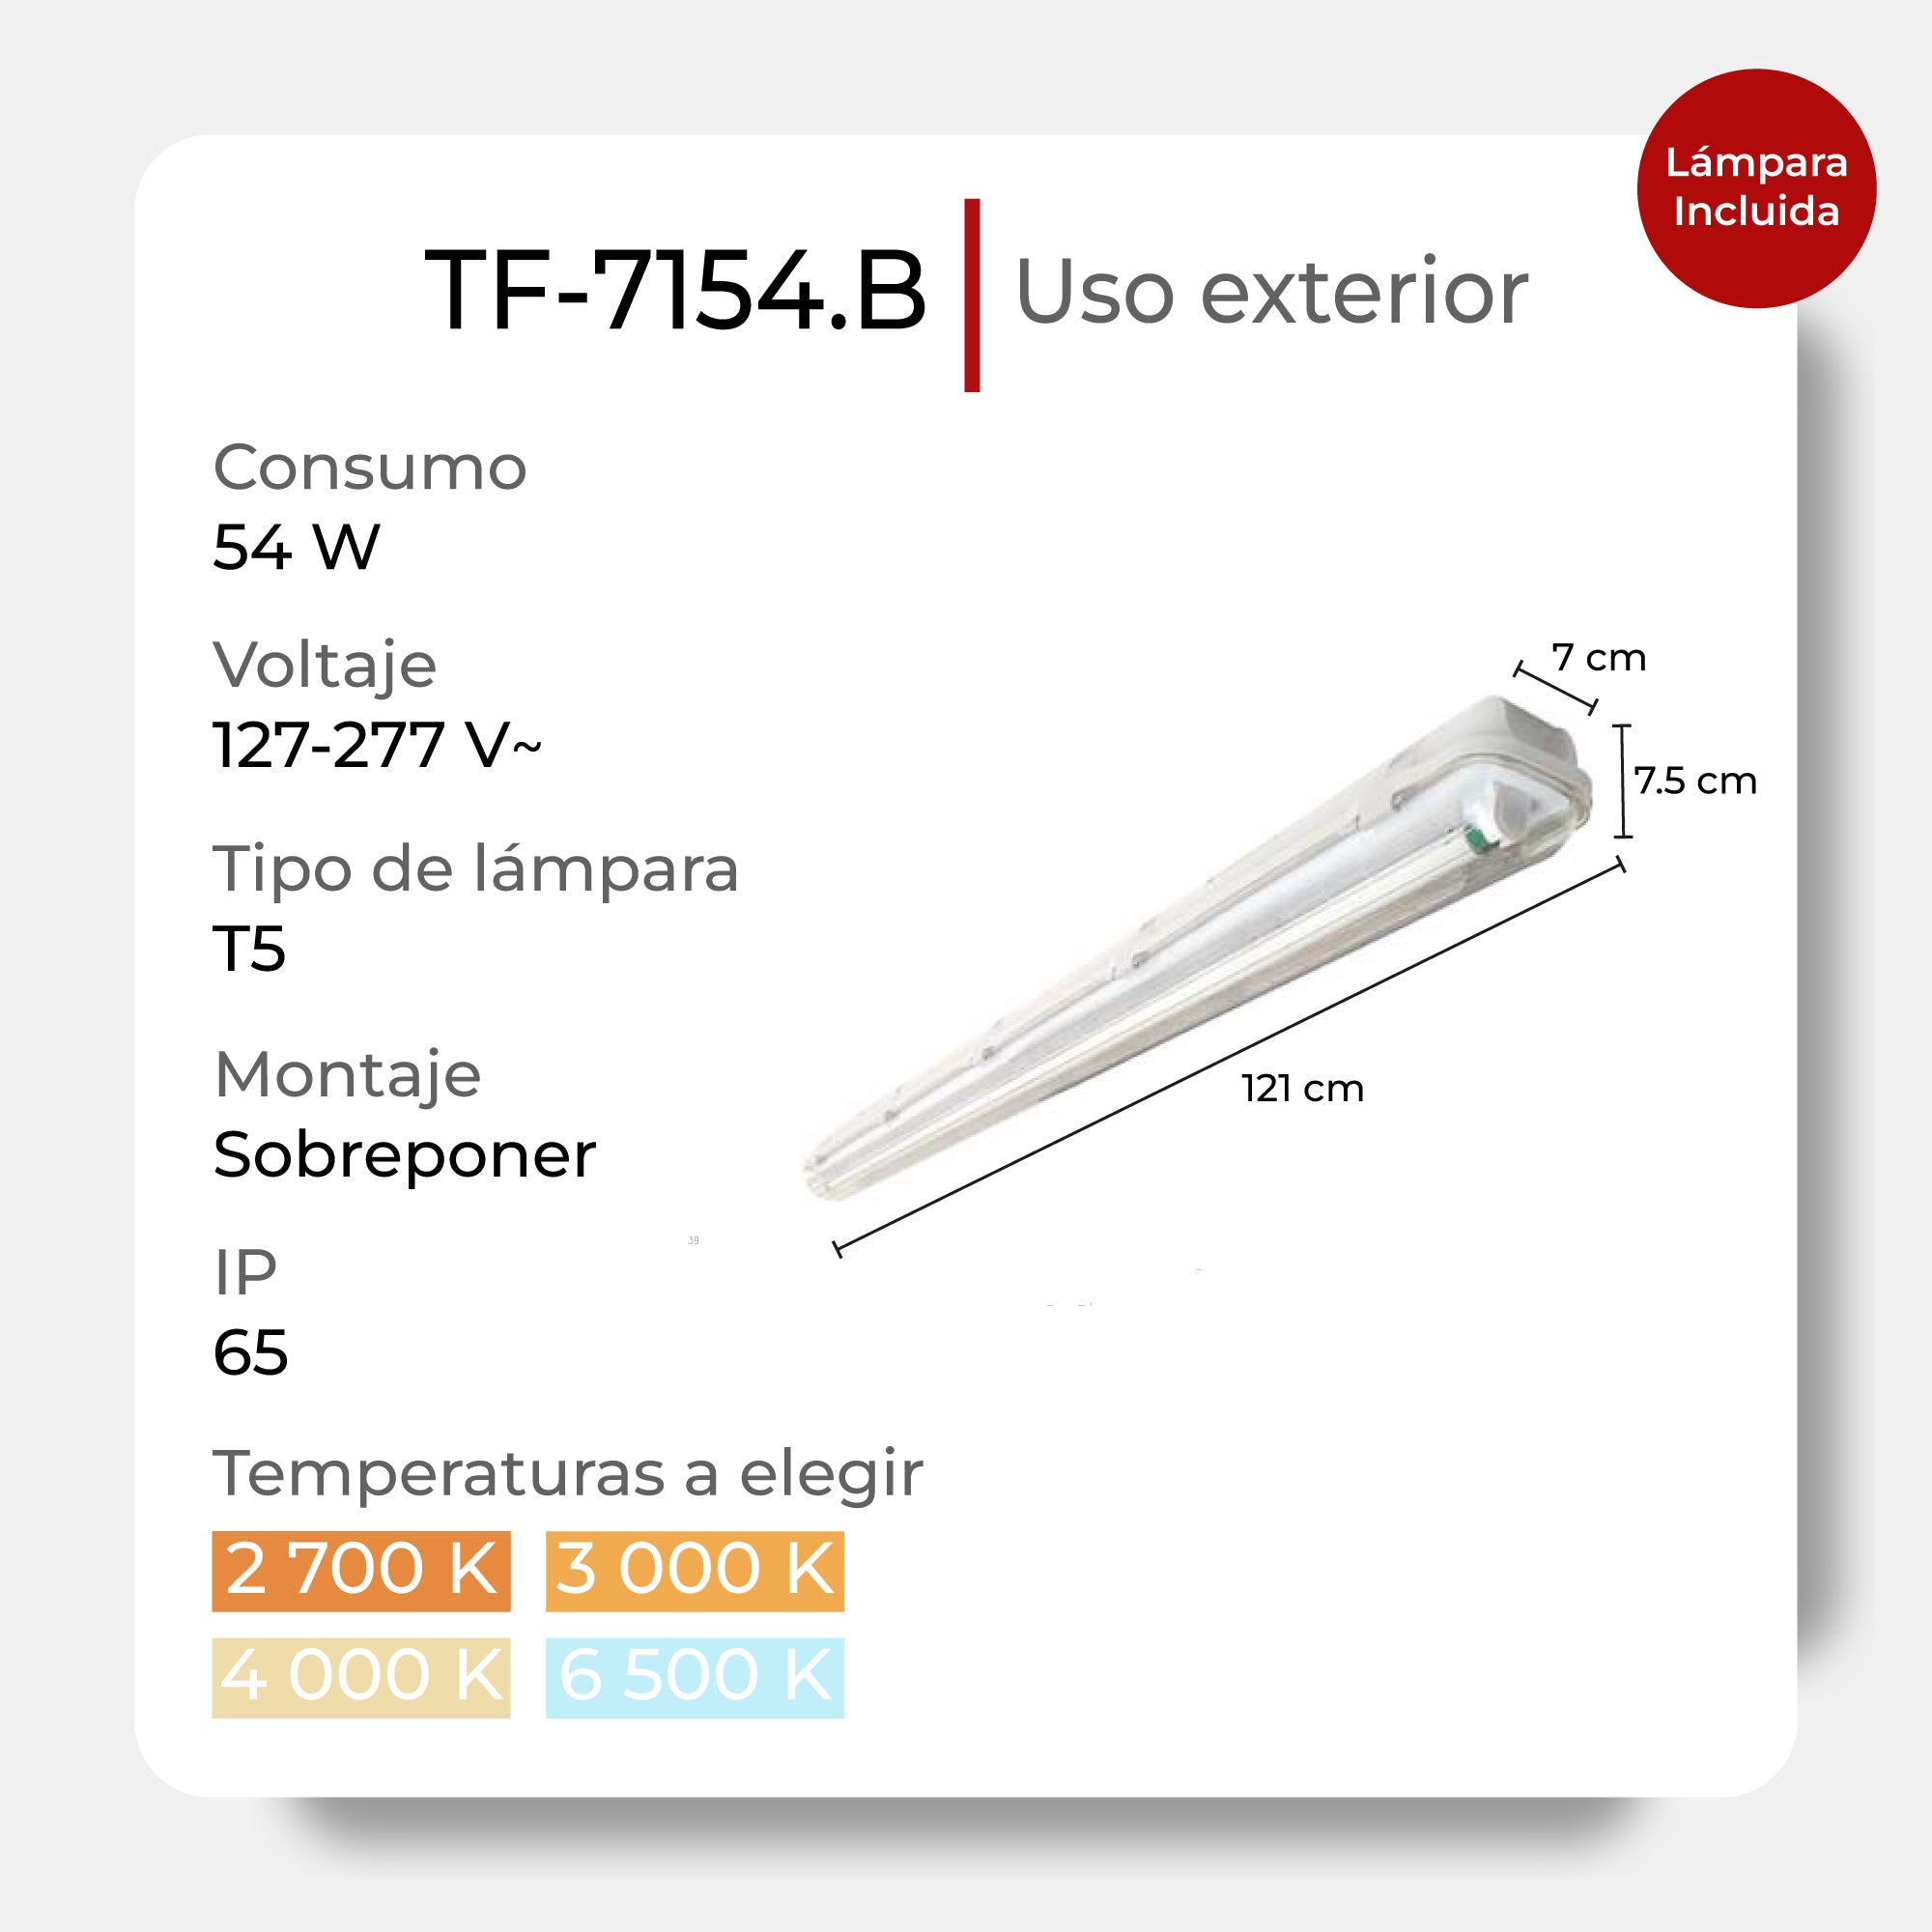 Luminario para Estacionamiento Modelo: TF-7154.B Iluminación Efectiva con Durabilidad Garantizada